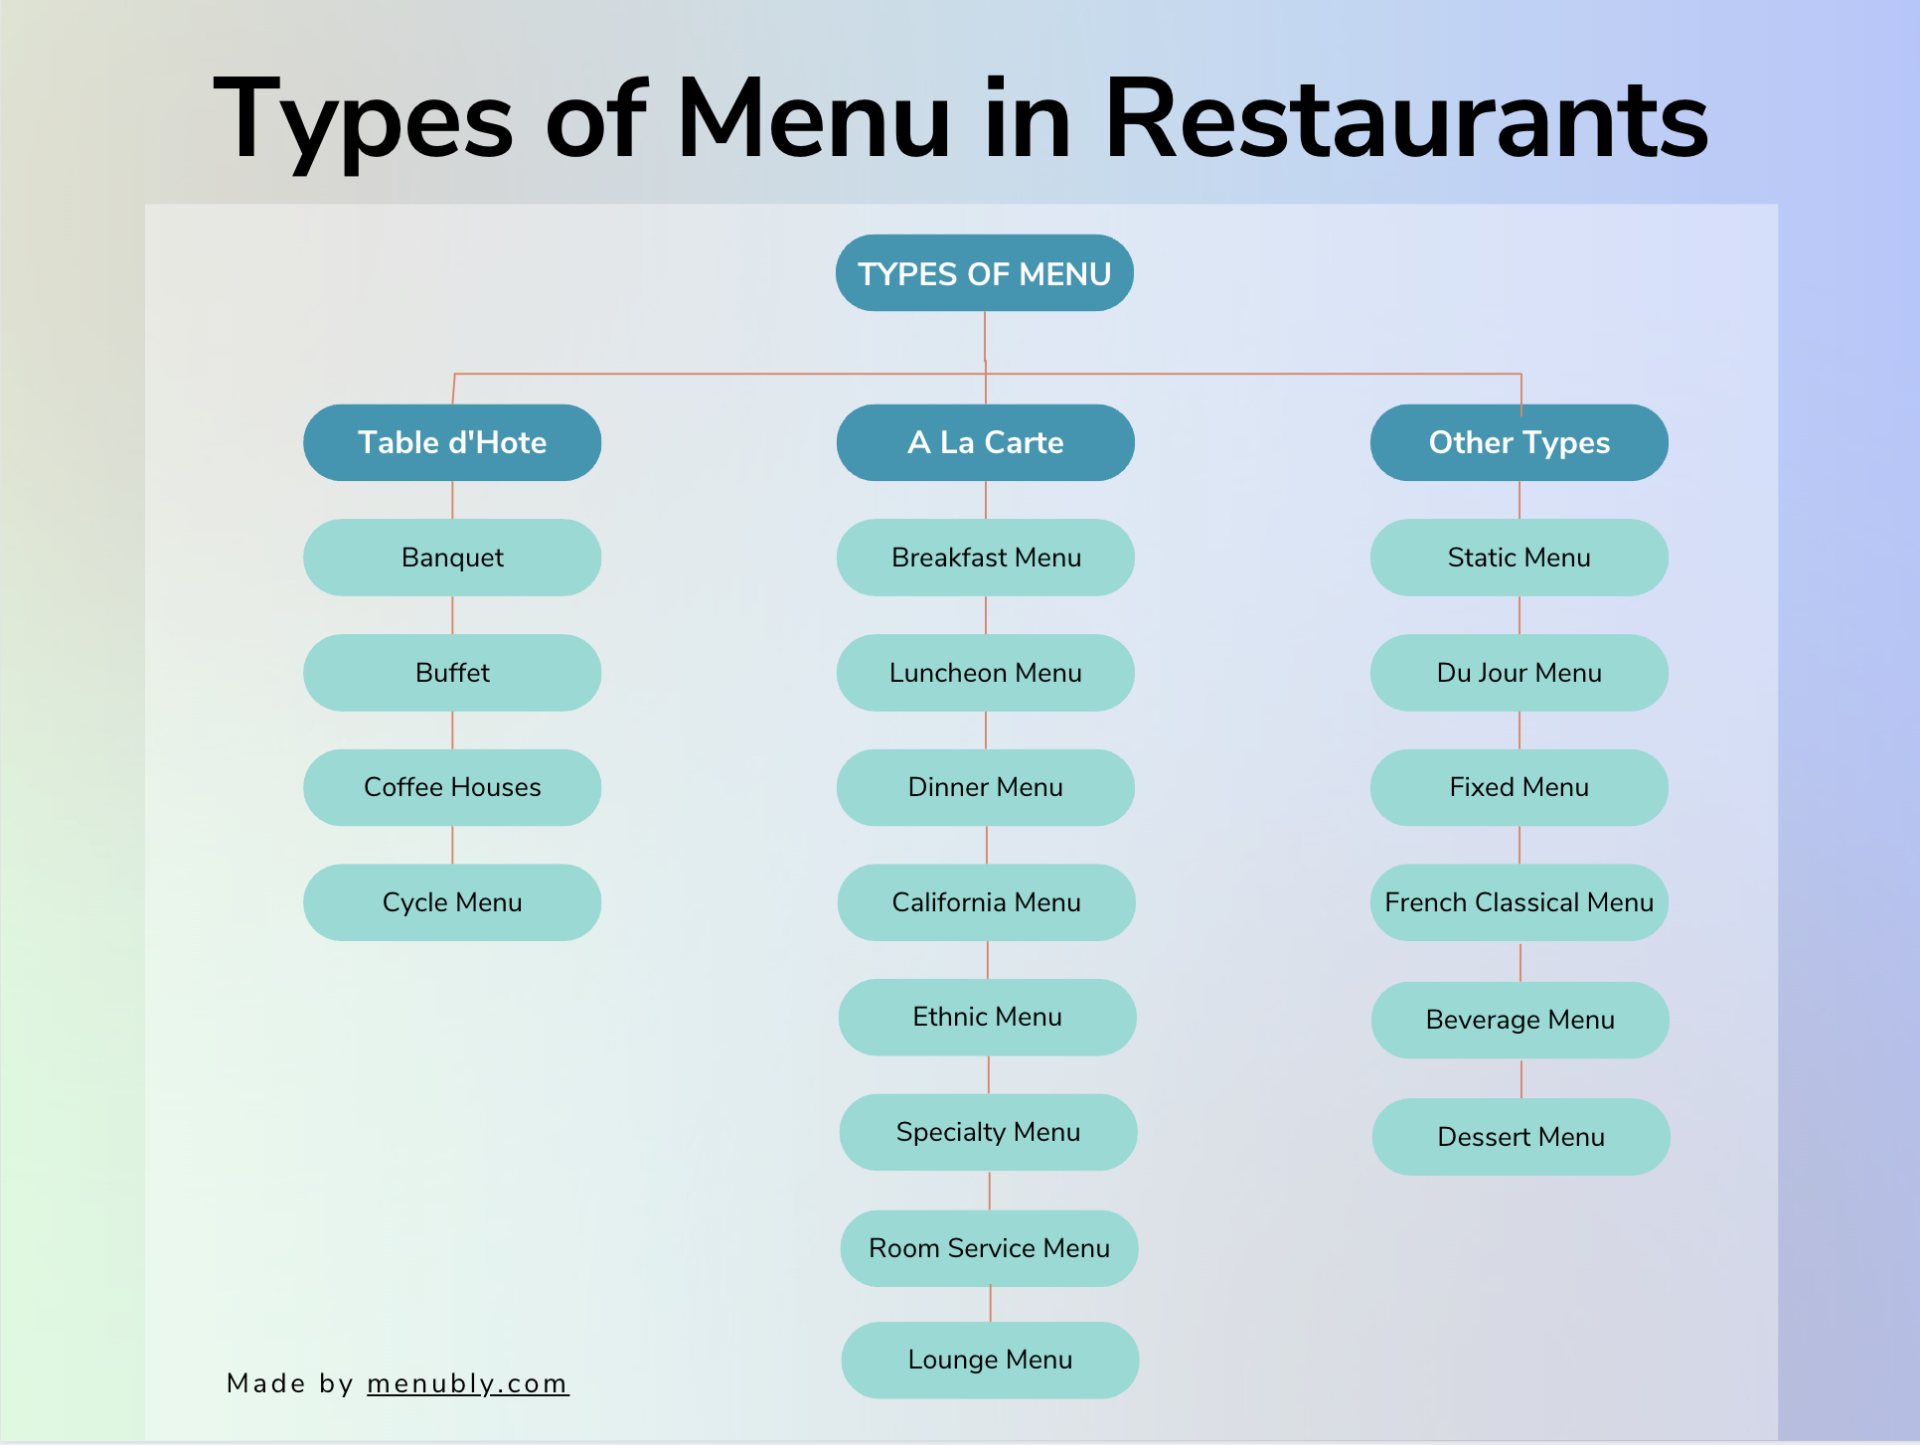 Types of Menu in Restaurants